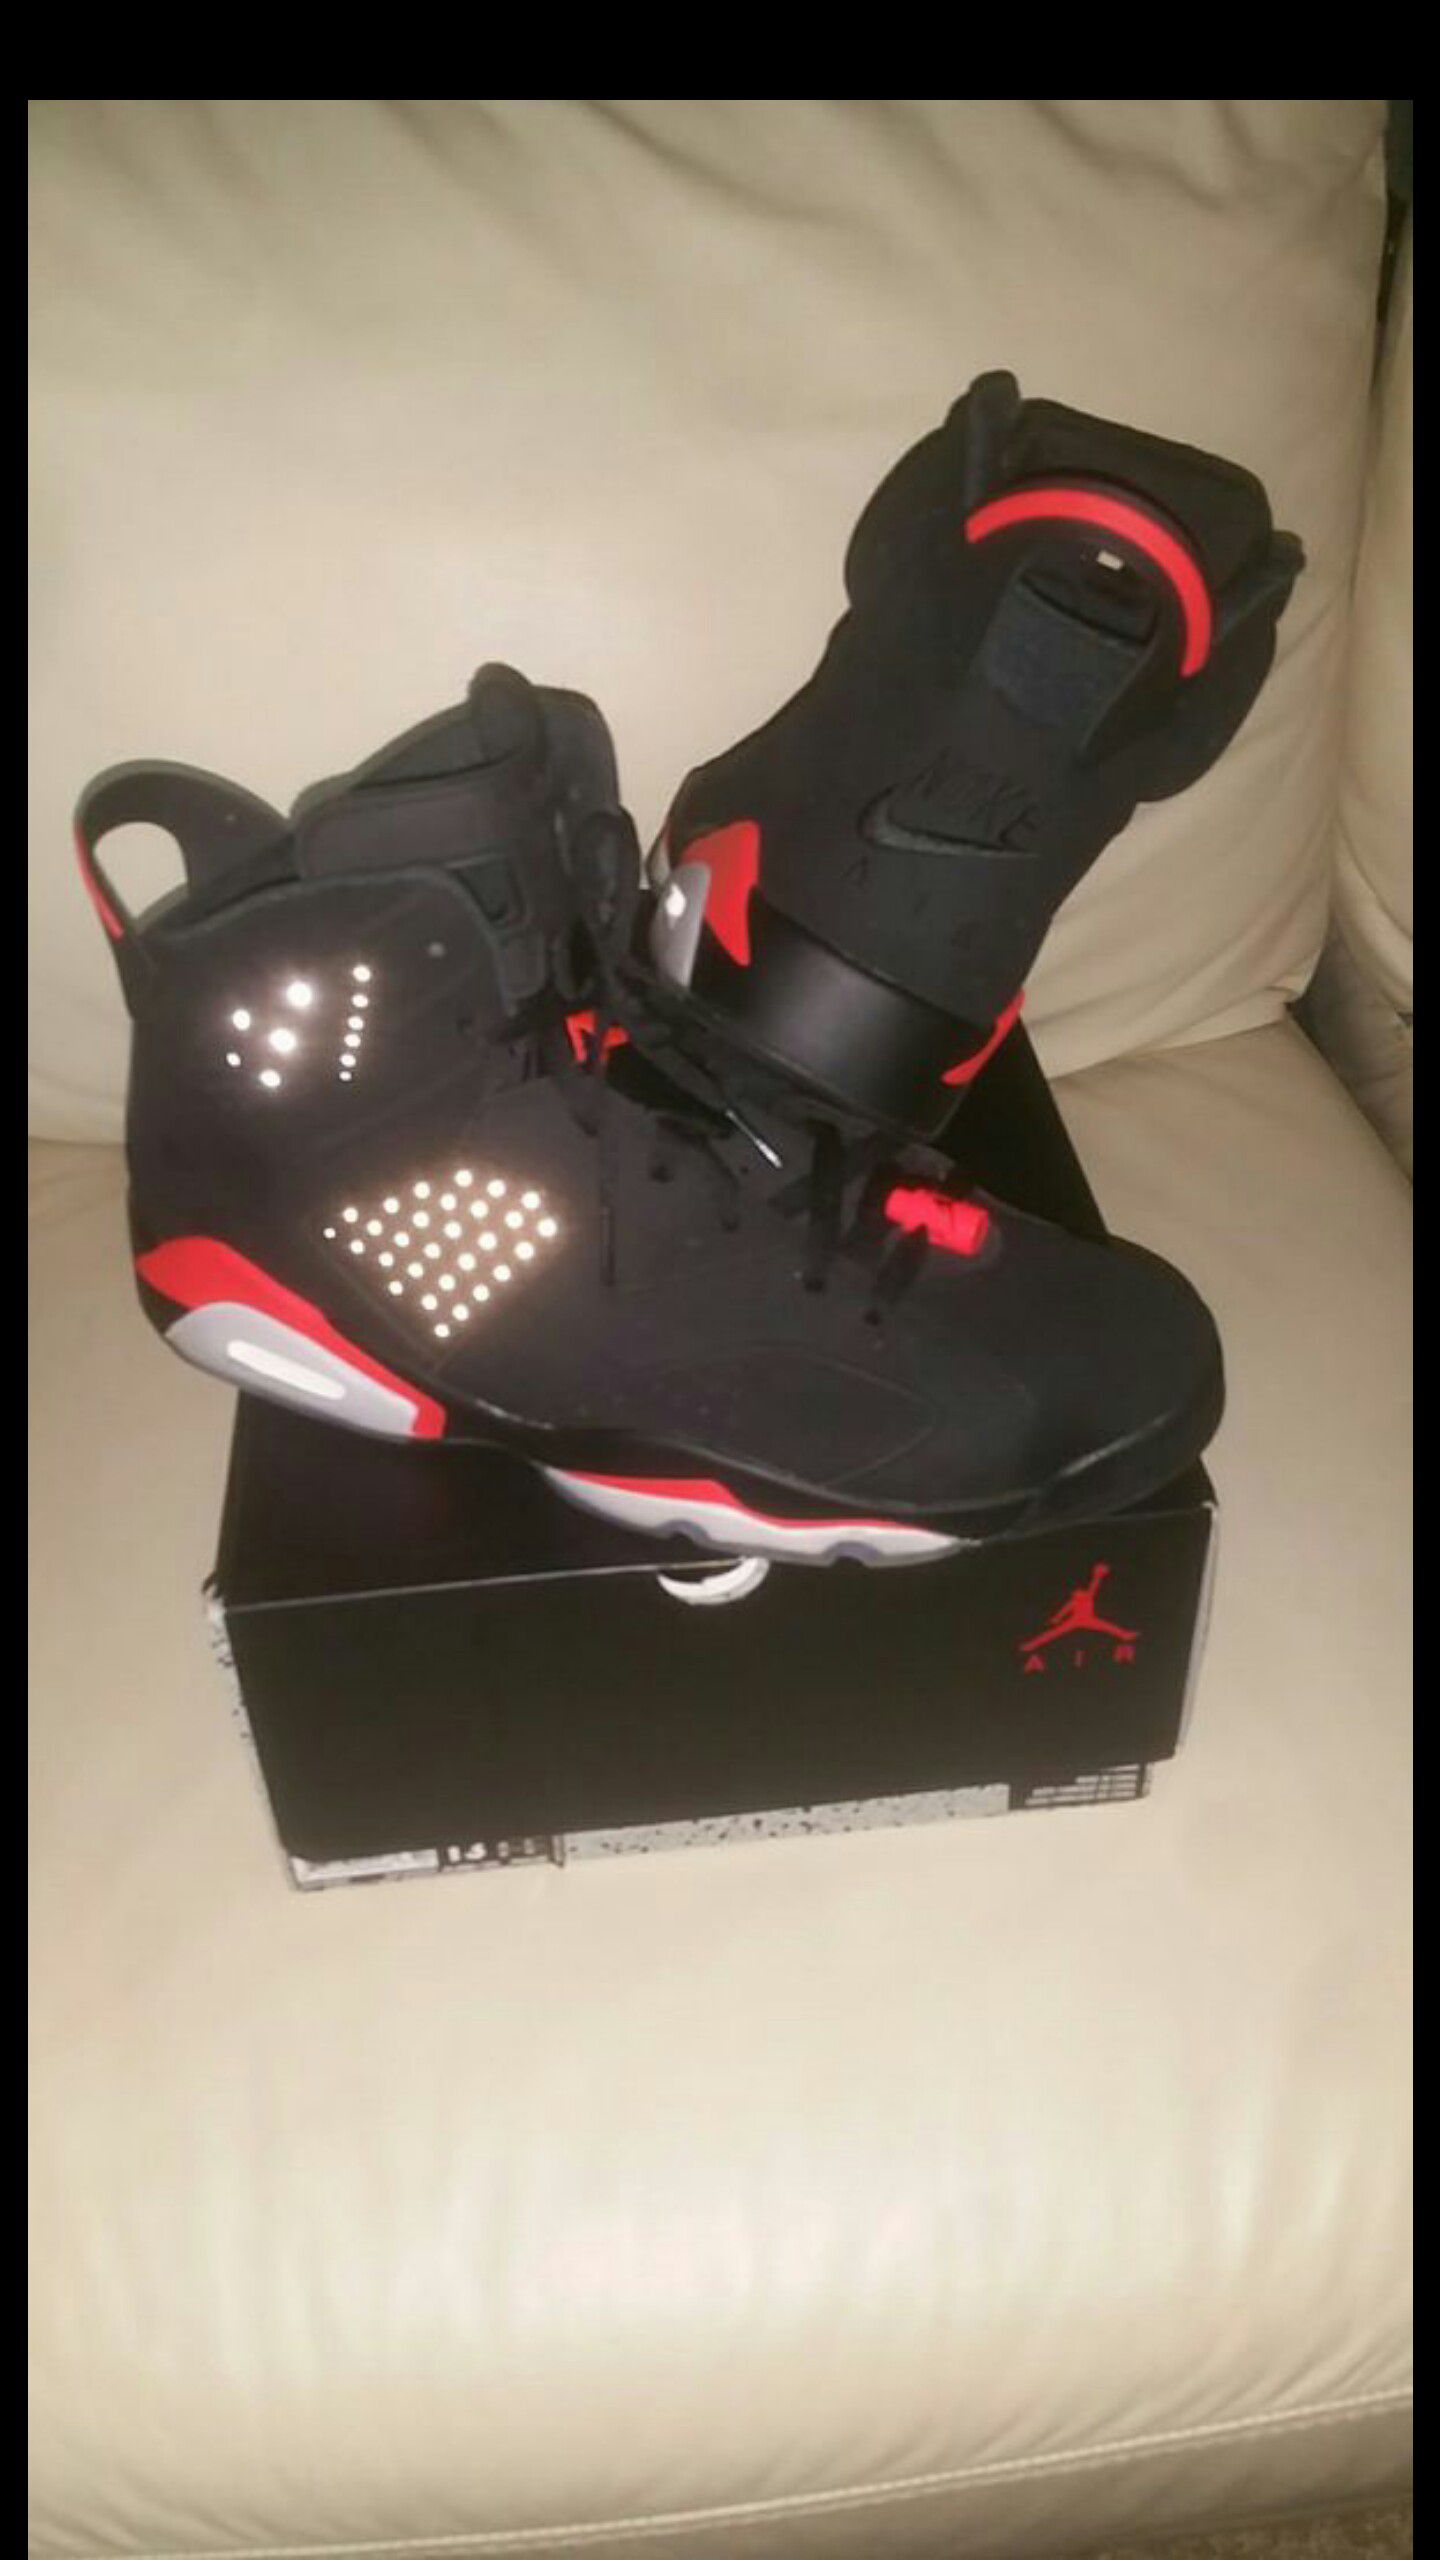 Size13 2019 Retro Jordan Nike Air 6s infrared bred Jays VI Sneakers shoes nikeair nike retro6